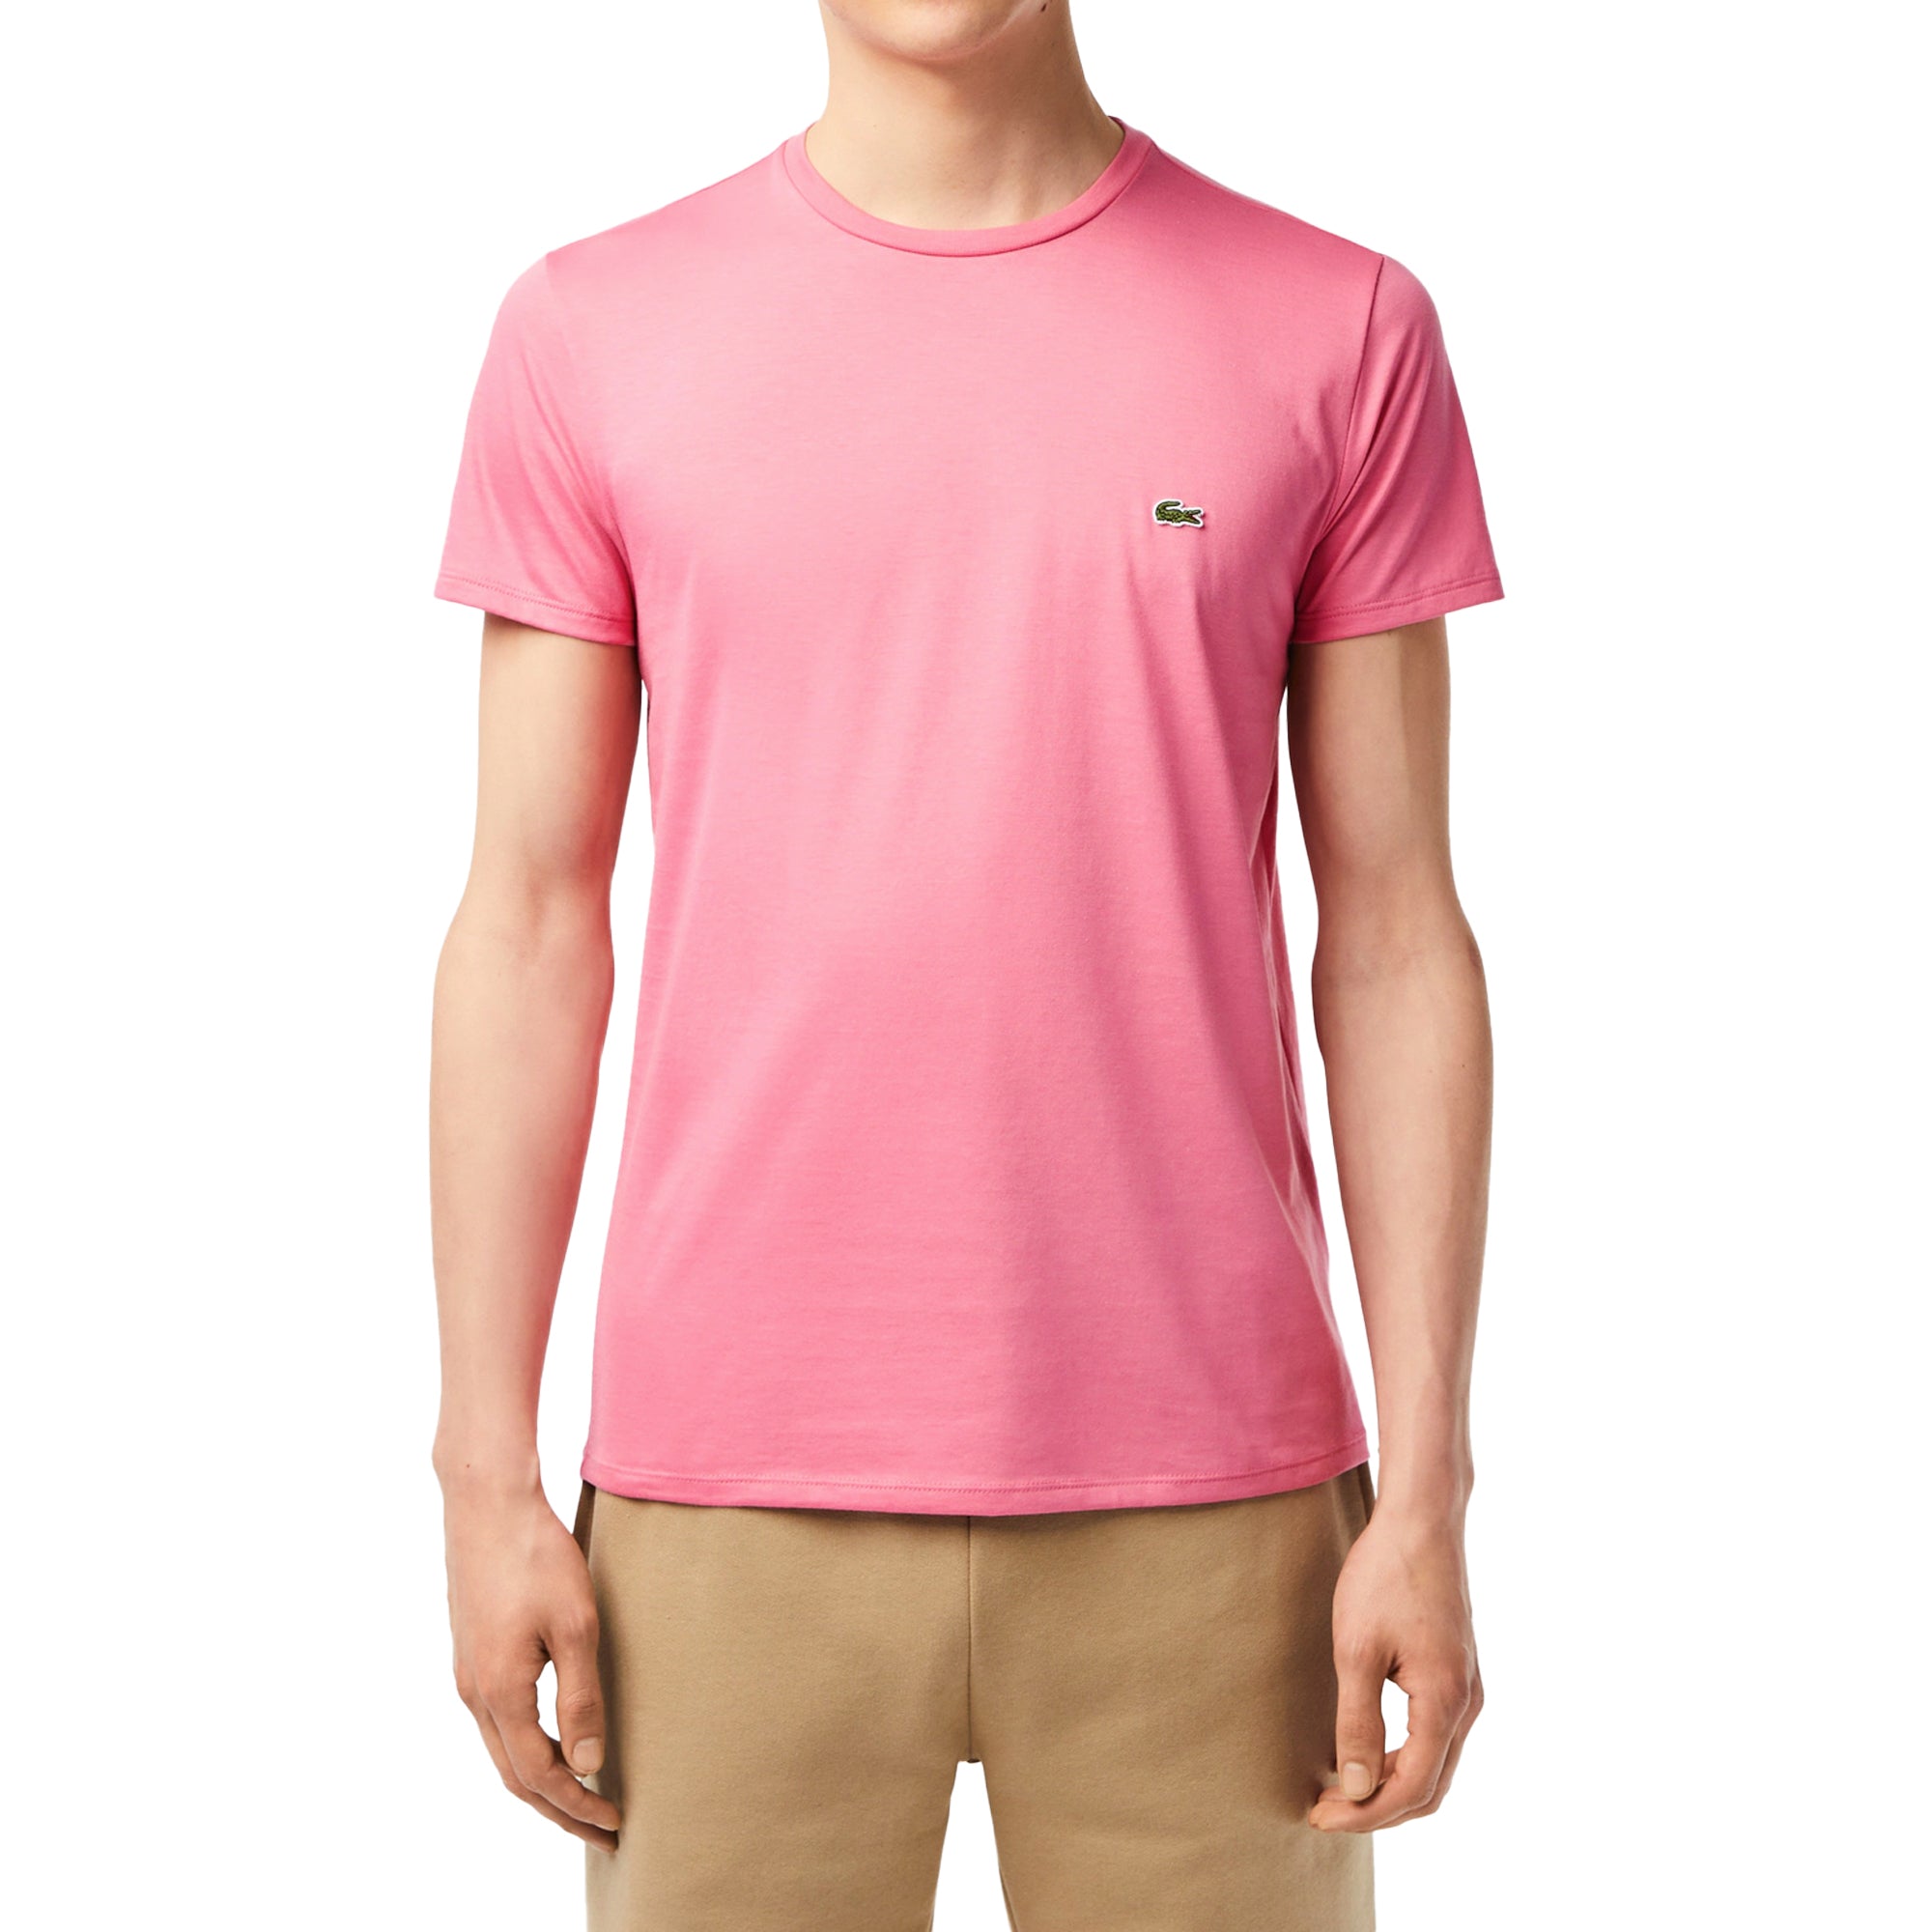 Reseda Cotton Lacoste TH6709 - Pima T-Shirt Pink